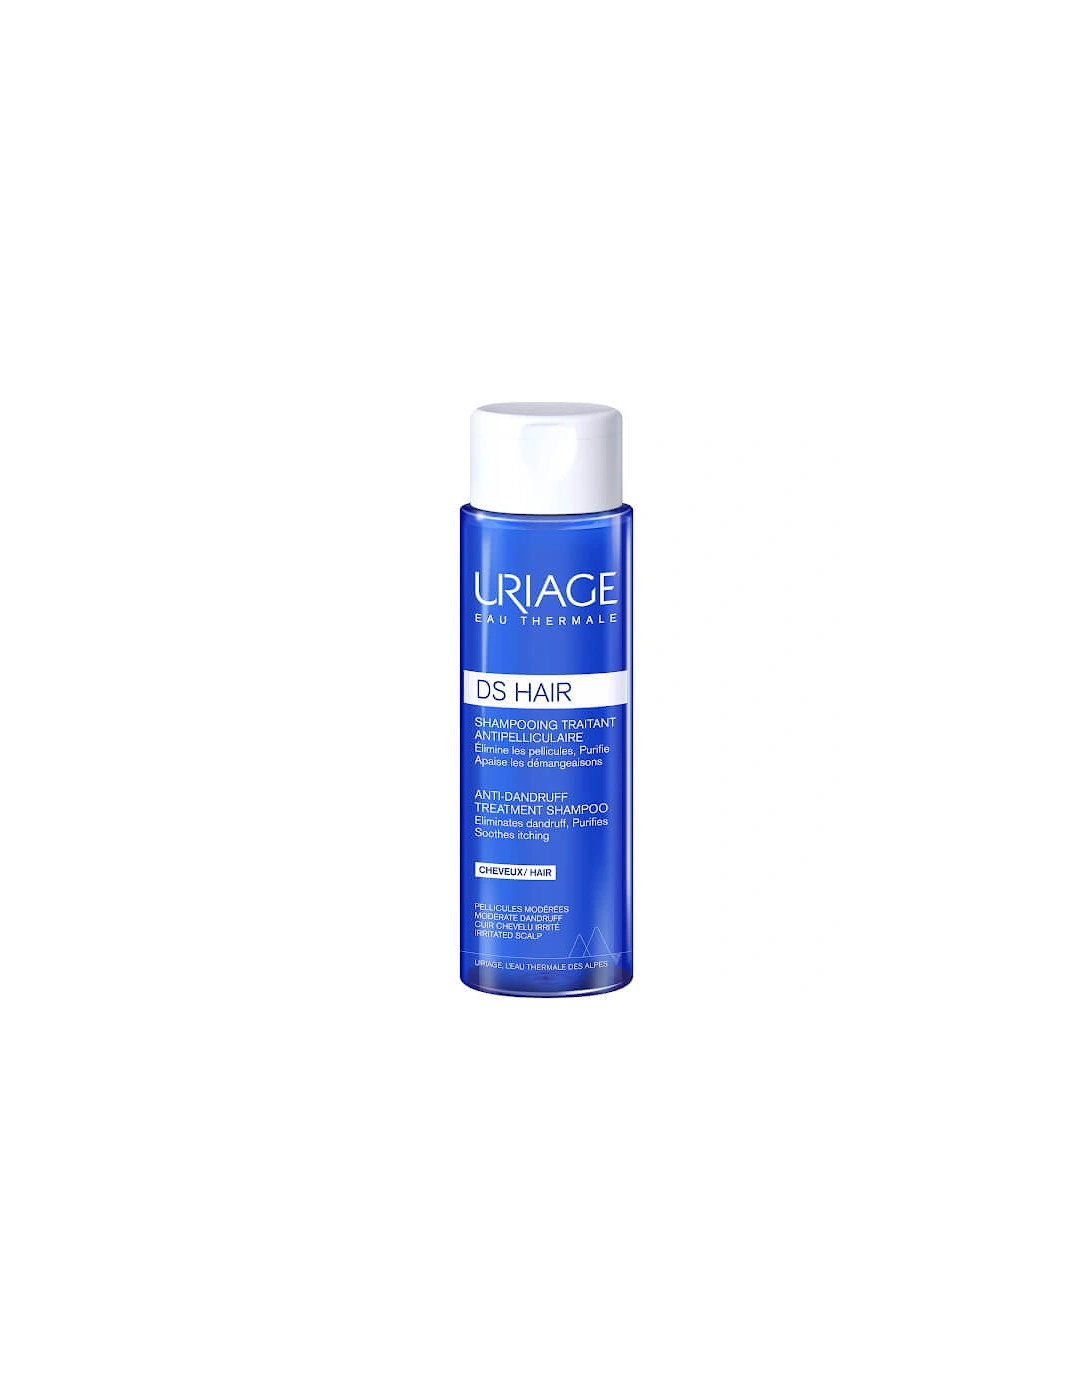 DS Hair Anti-Dandruff Treatment Shampoo 200ml - Uriage, 2 of 1